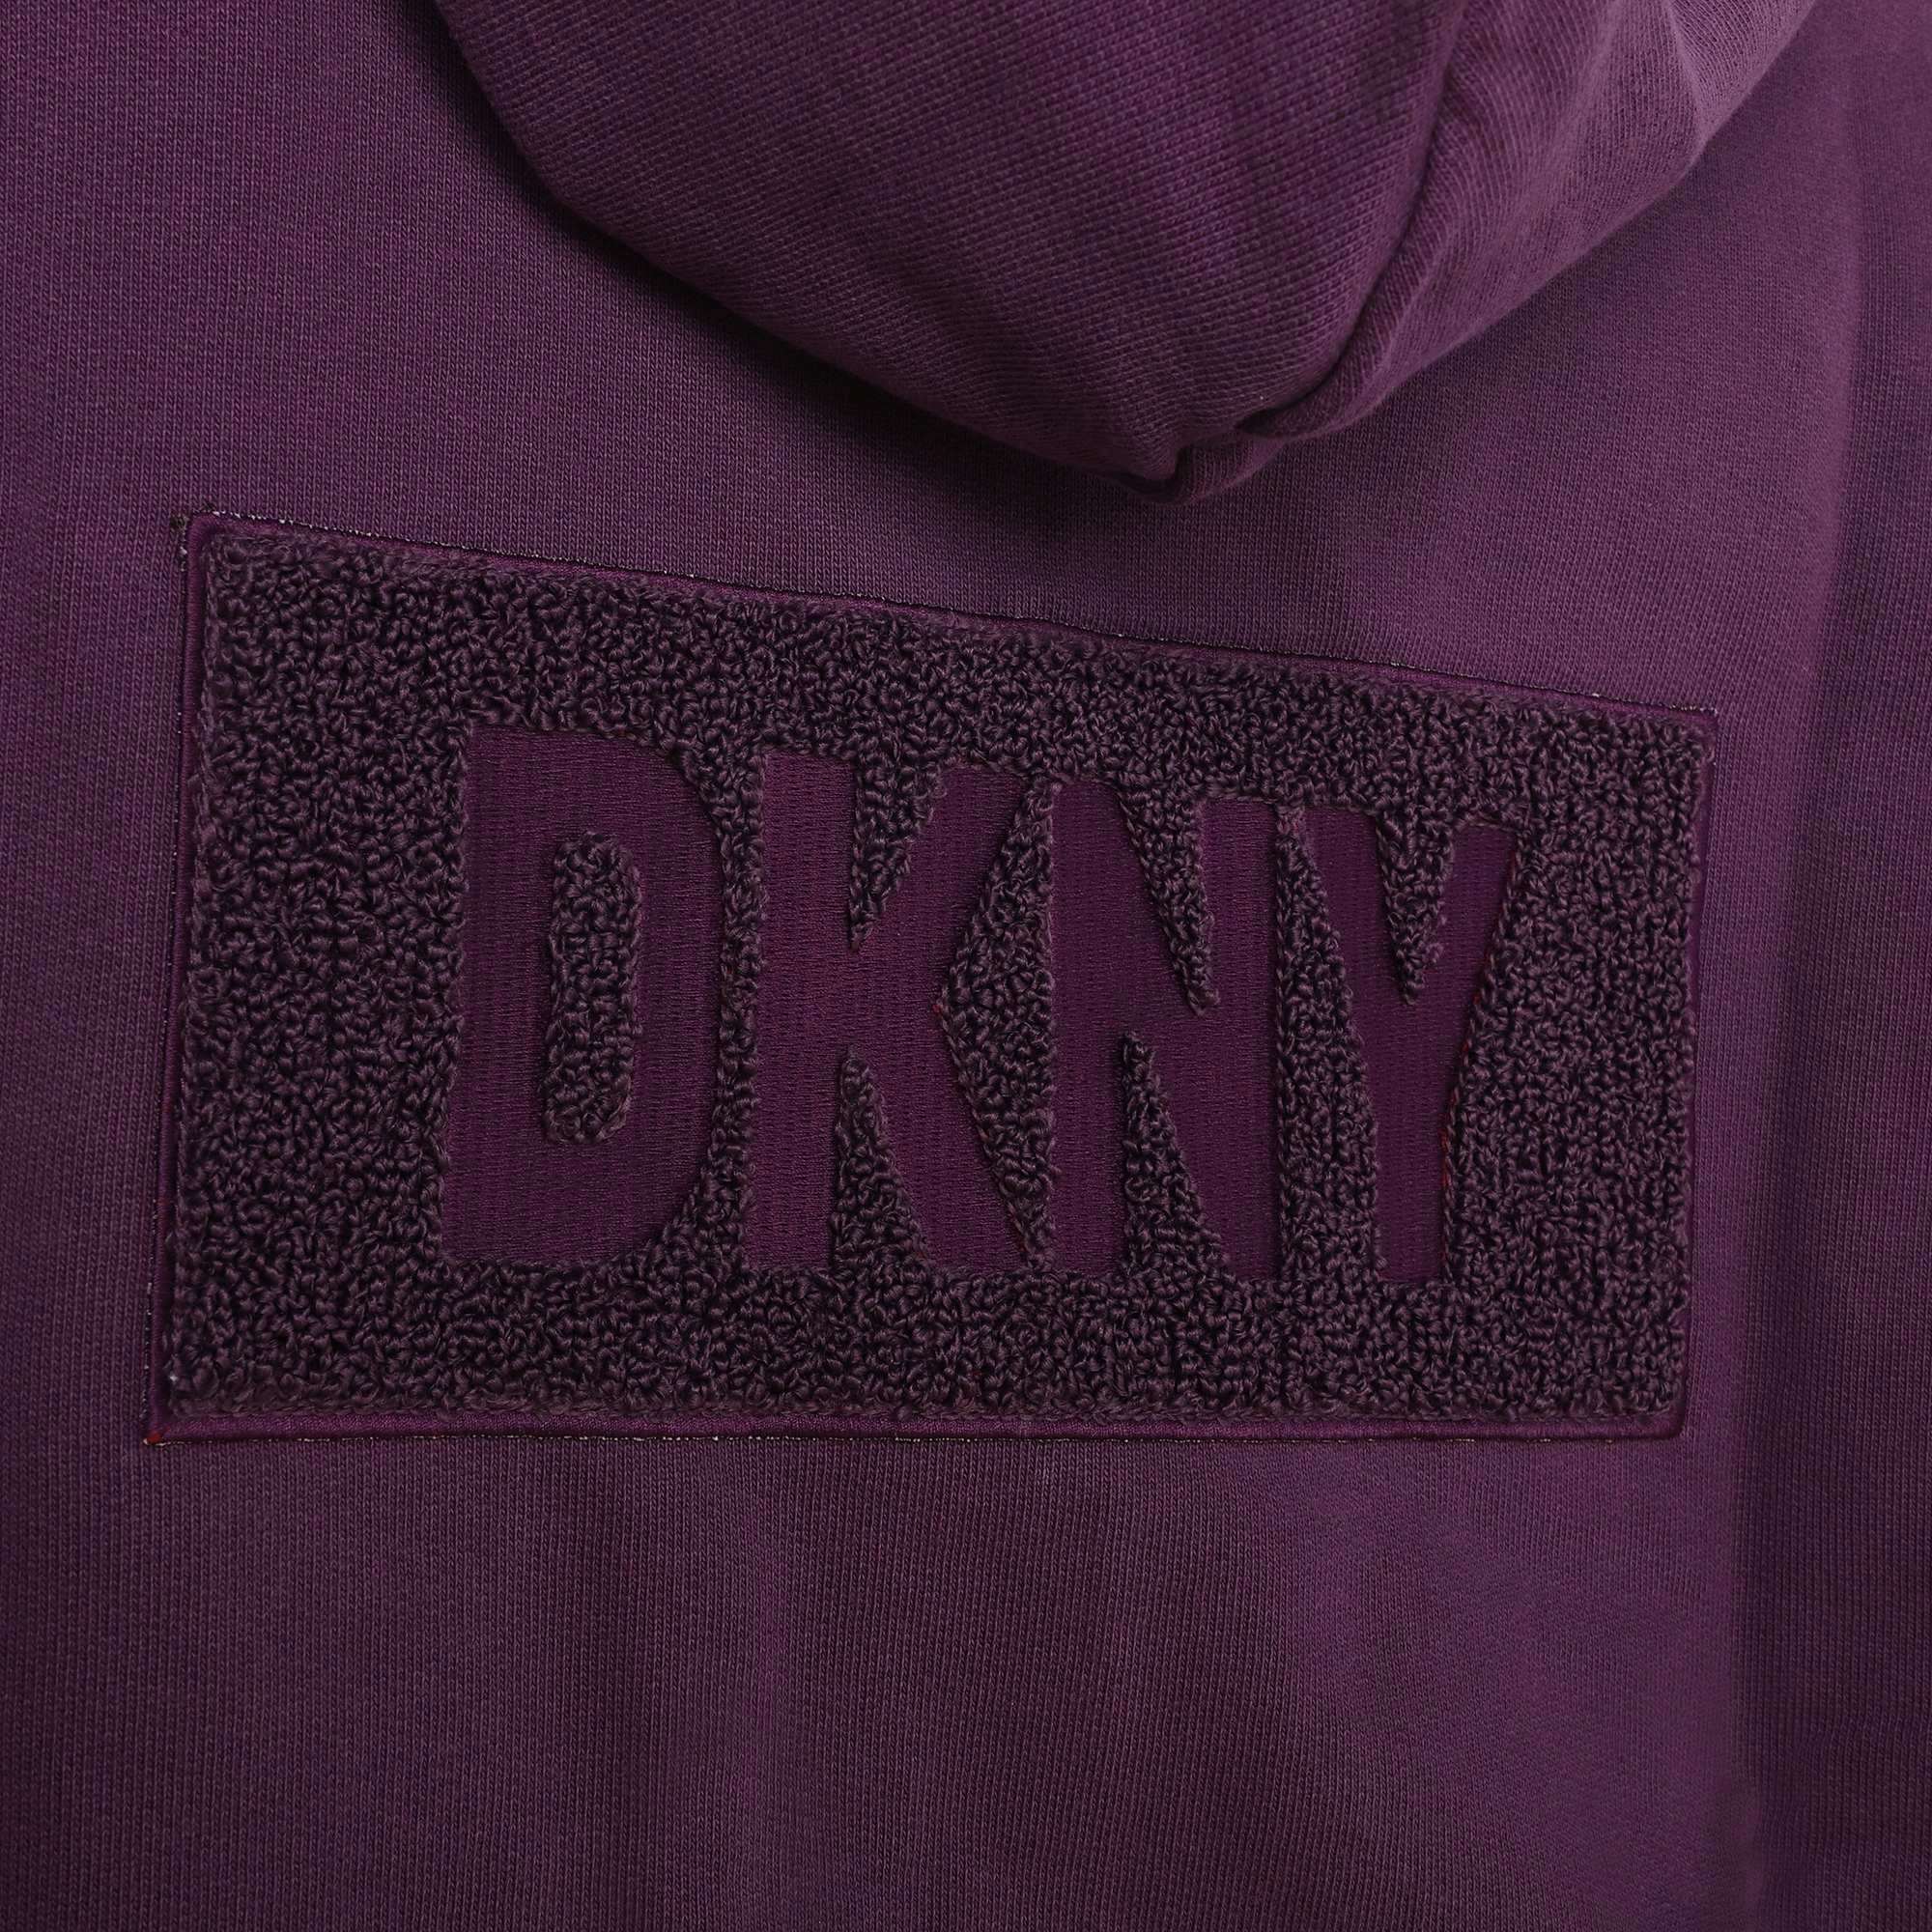 Cardigan con cappuccio DKNY Per UNISEX